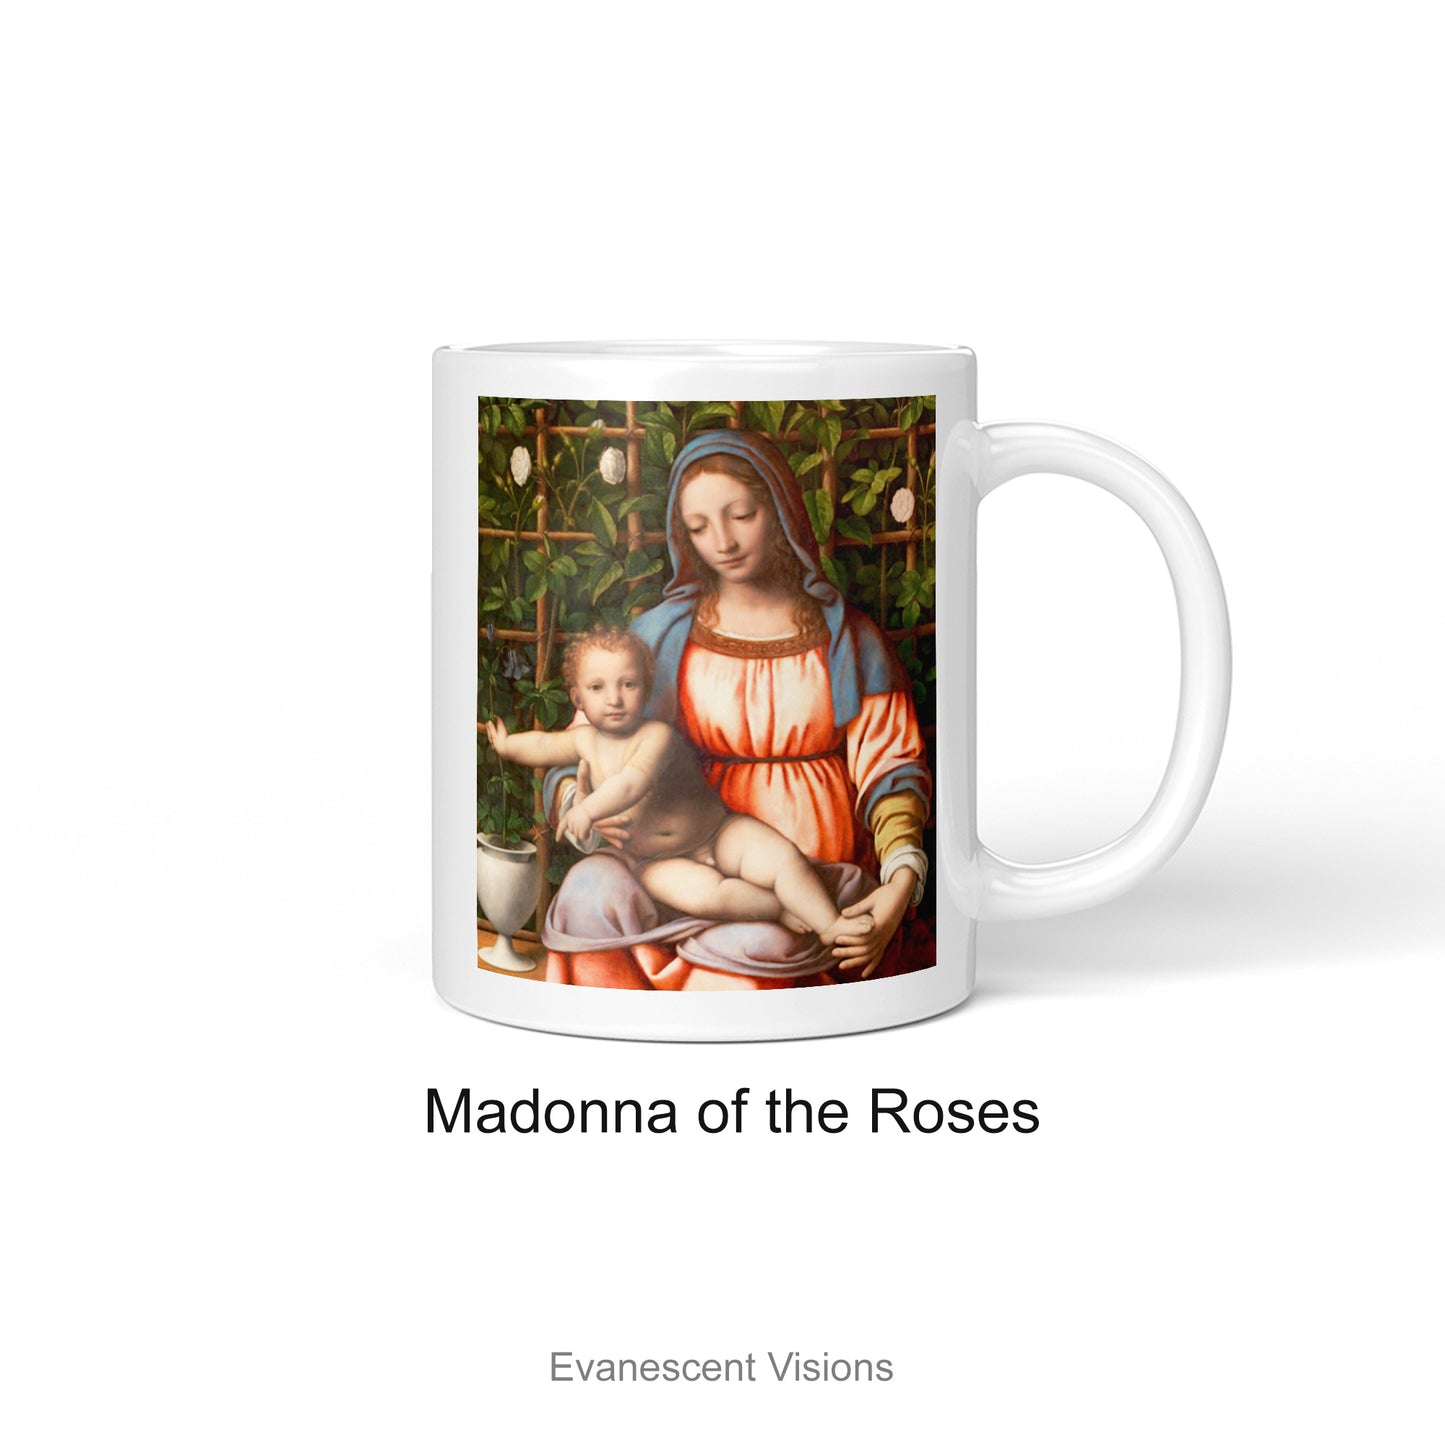 Fine Art Madonna and Child Religious Mug option 'Madonna of the Roses'